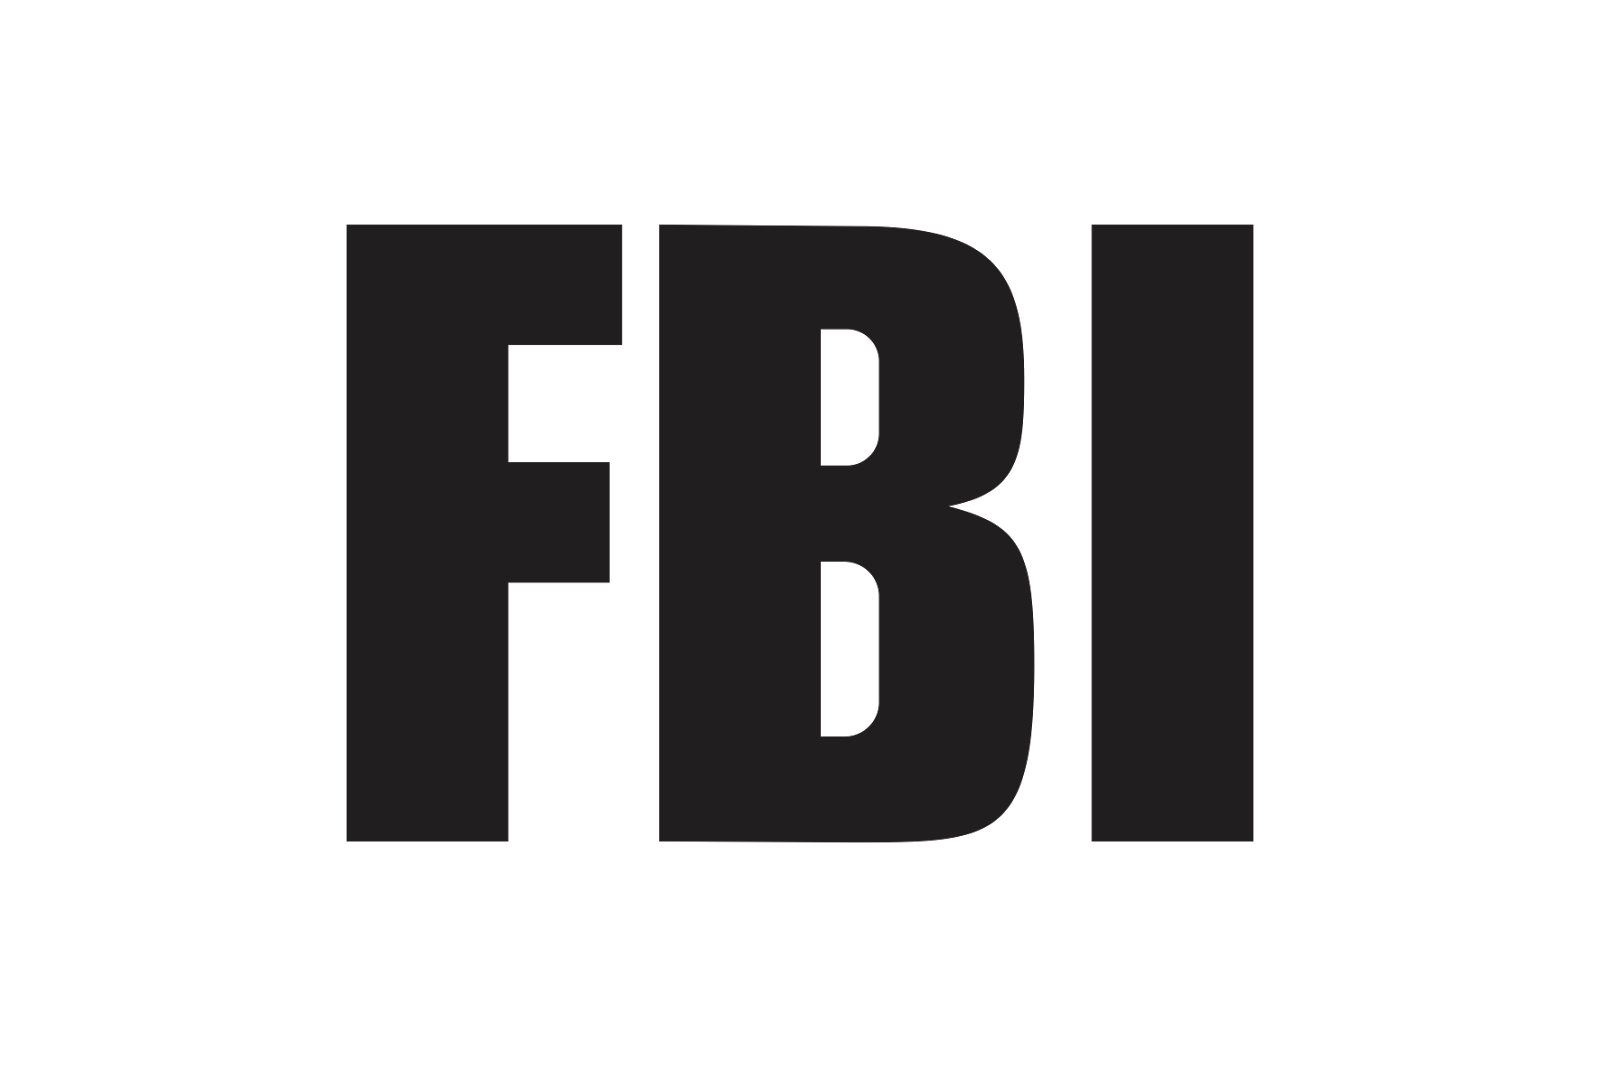 FBI_black